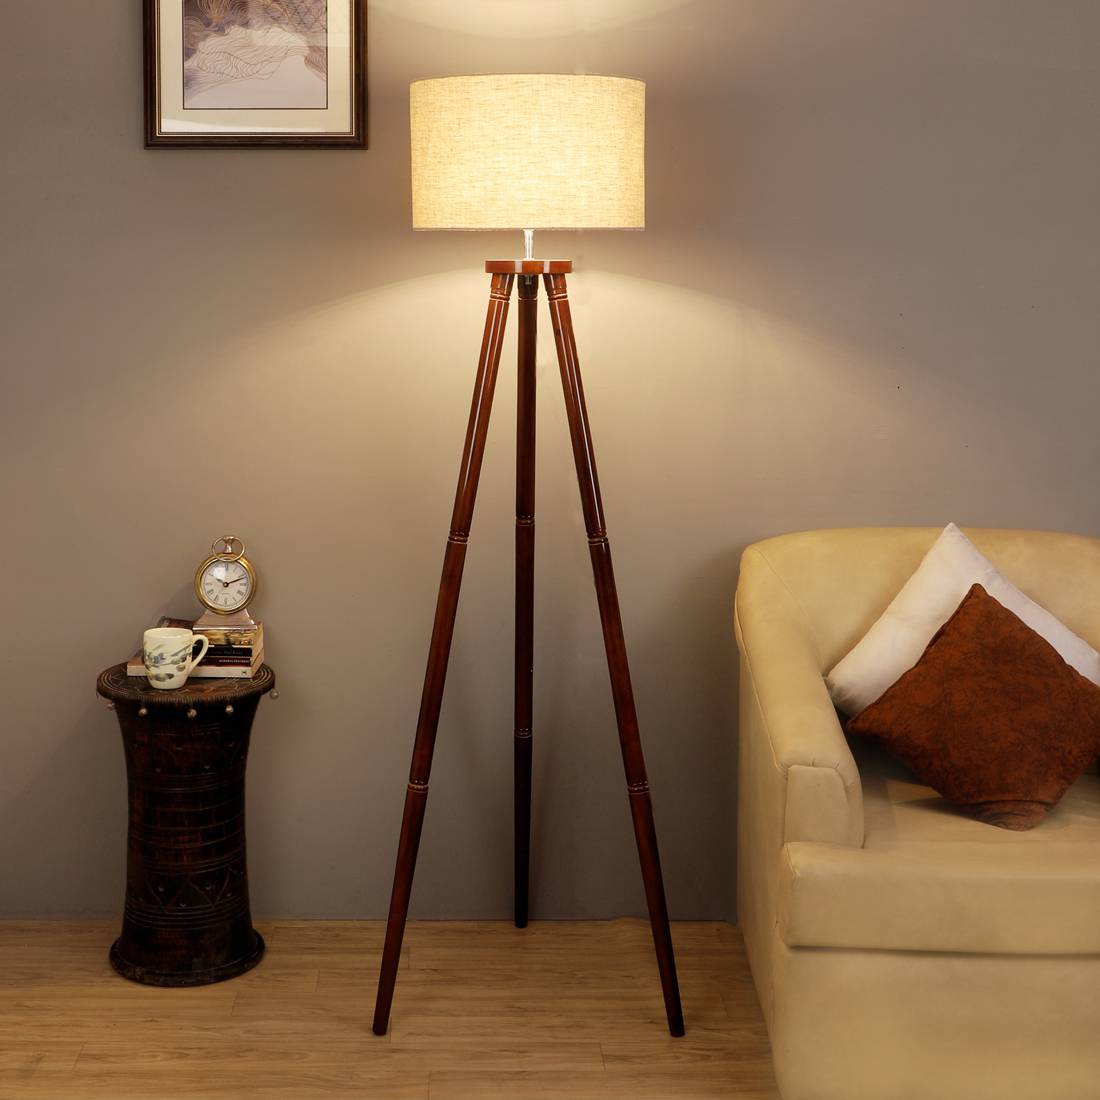 Floor Lamps Comtemporary, Images Of Floor Lamps In Living Room